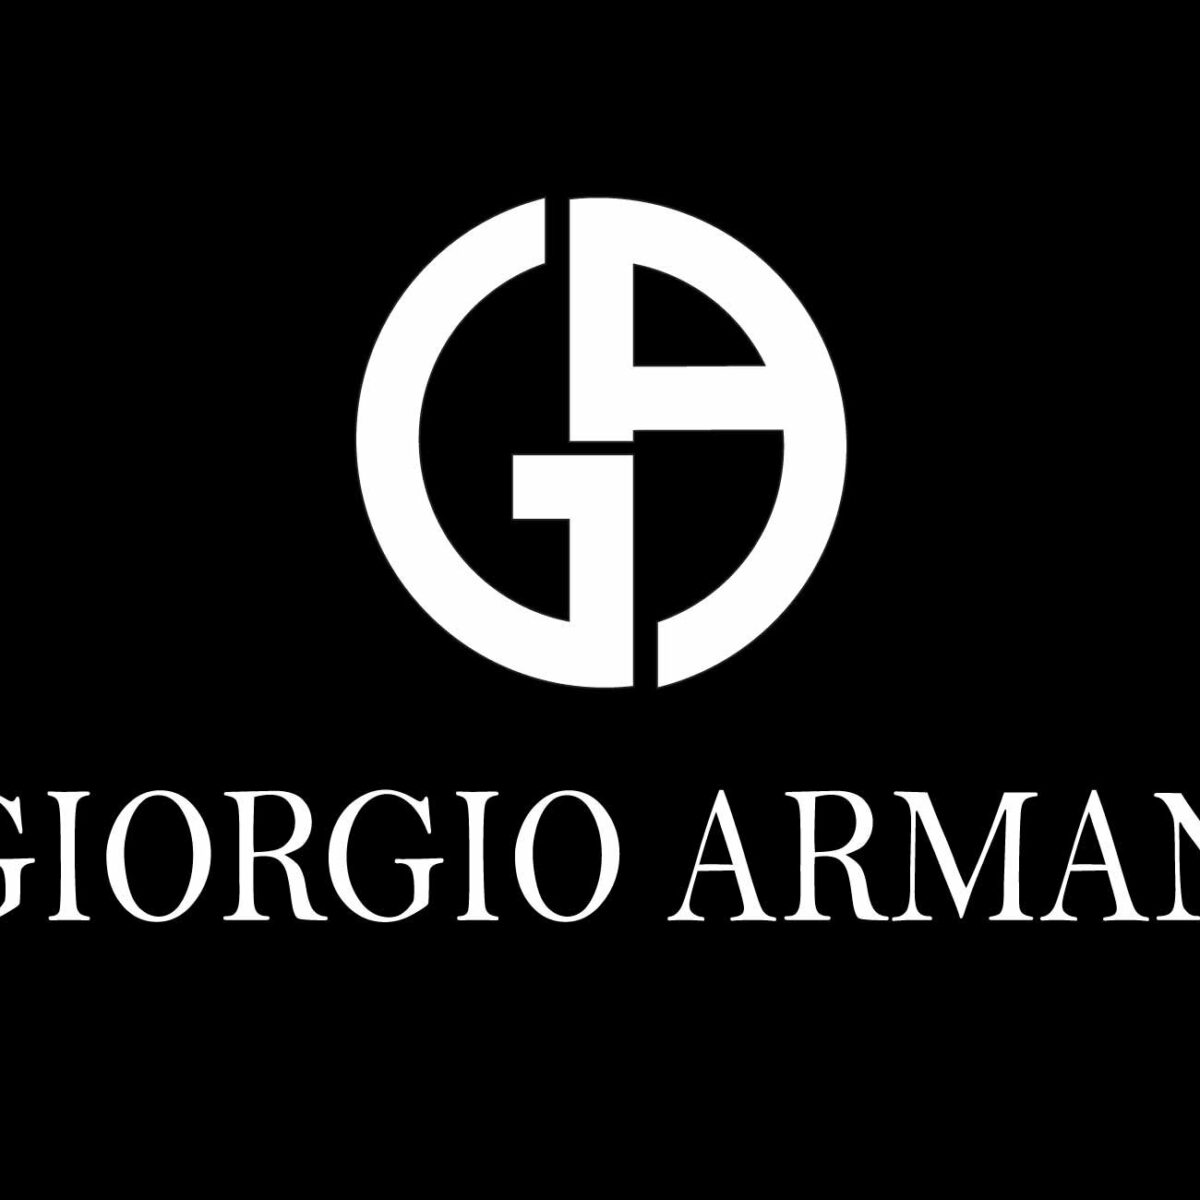 Total 95+ imagen armani logo history - Abzlocal.mx